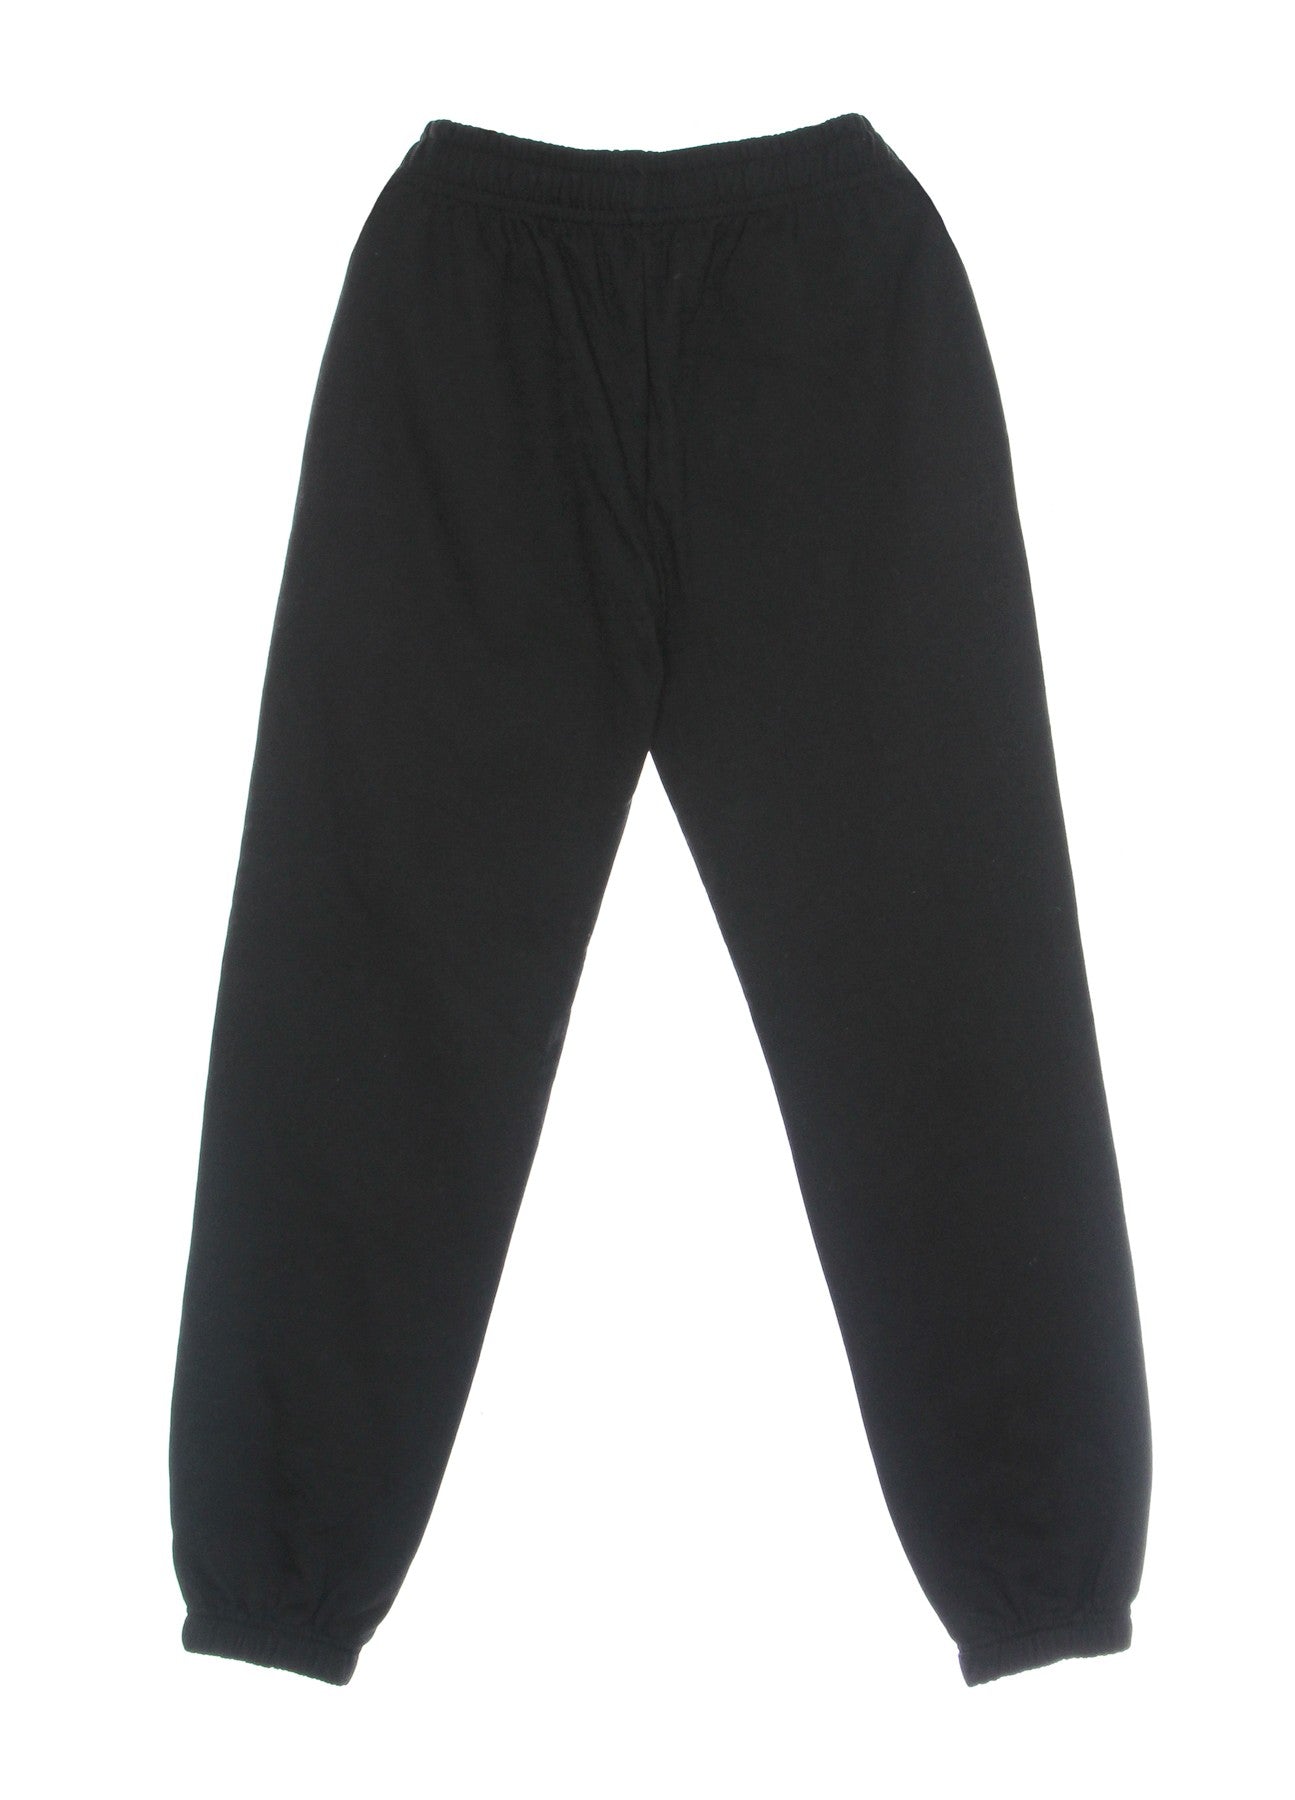 Pantalone Tuta Felpato Uomo Starter Pack Sweatpant Black ATIPICI002SP-SWEATPANT